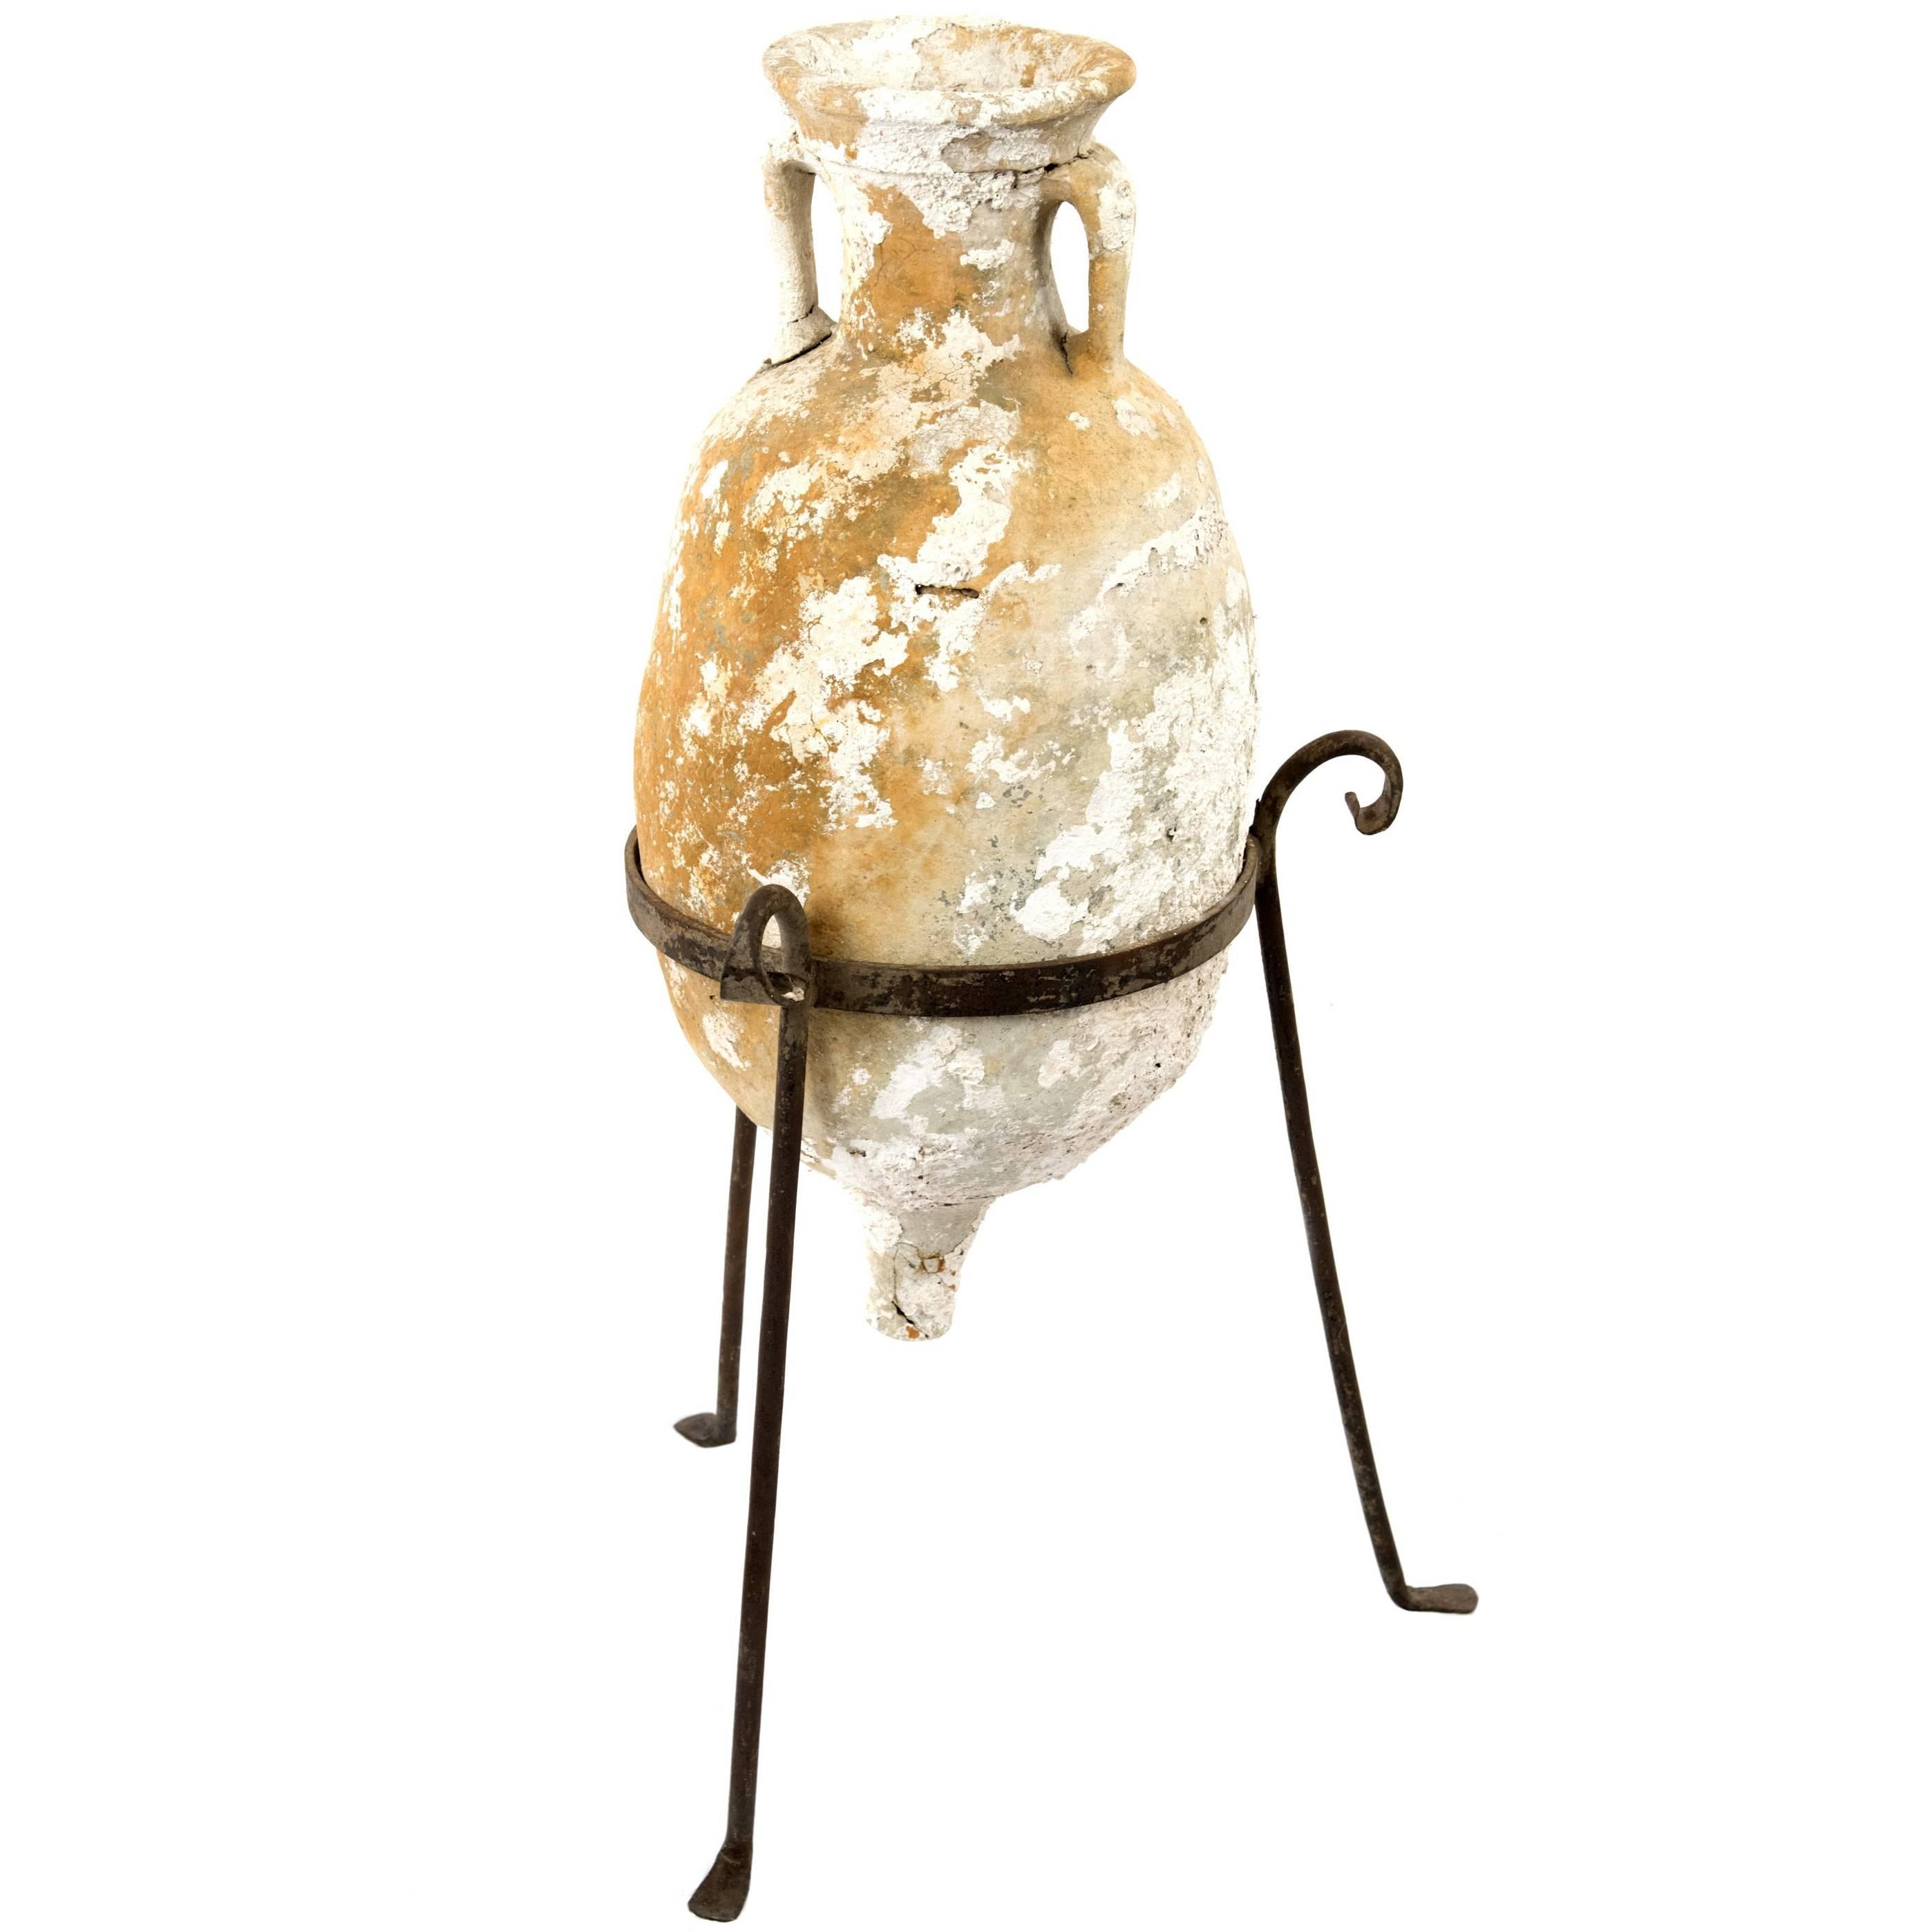 Italian Terracotta Amphora with Wrought Iron Tripod Stand